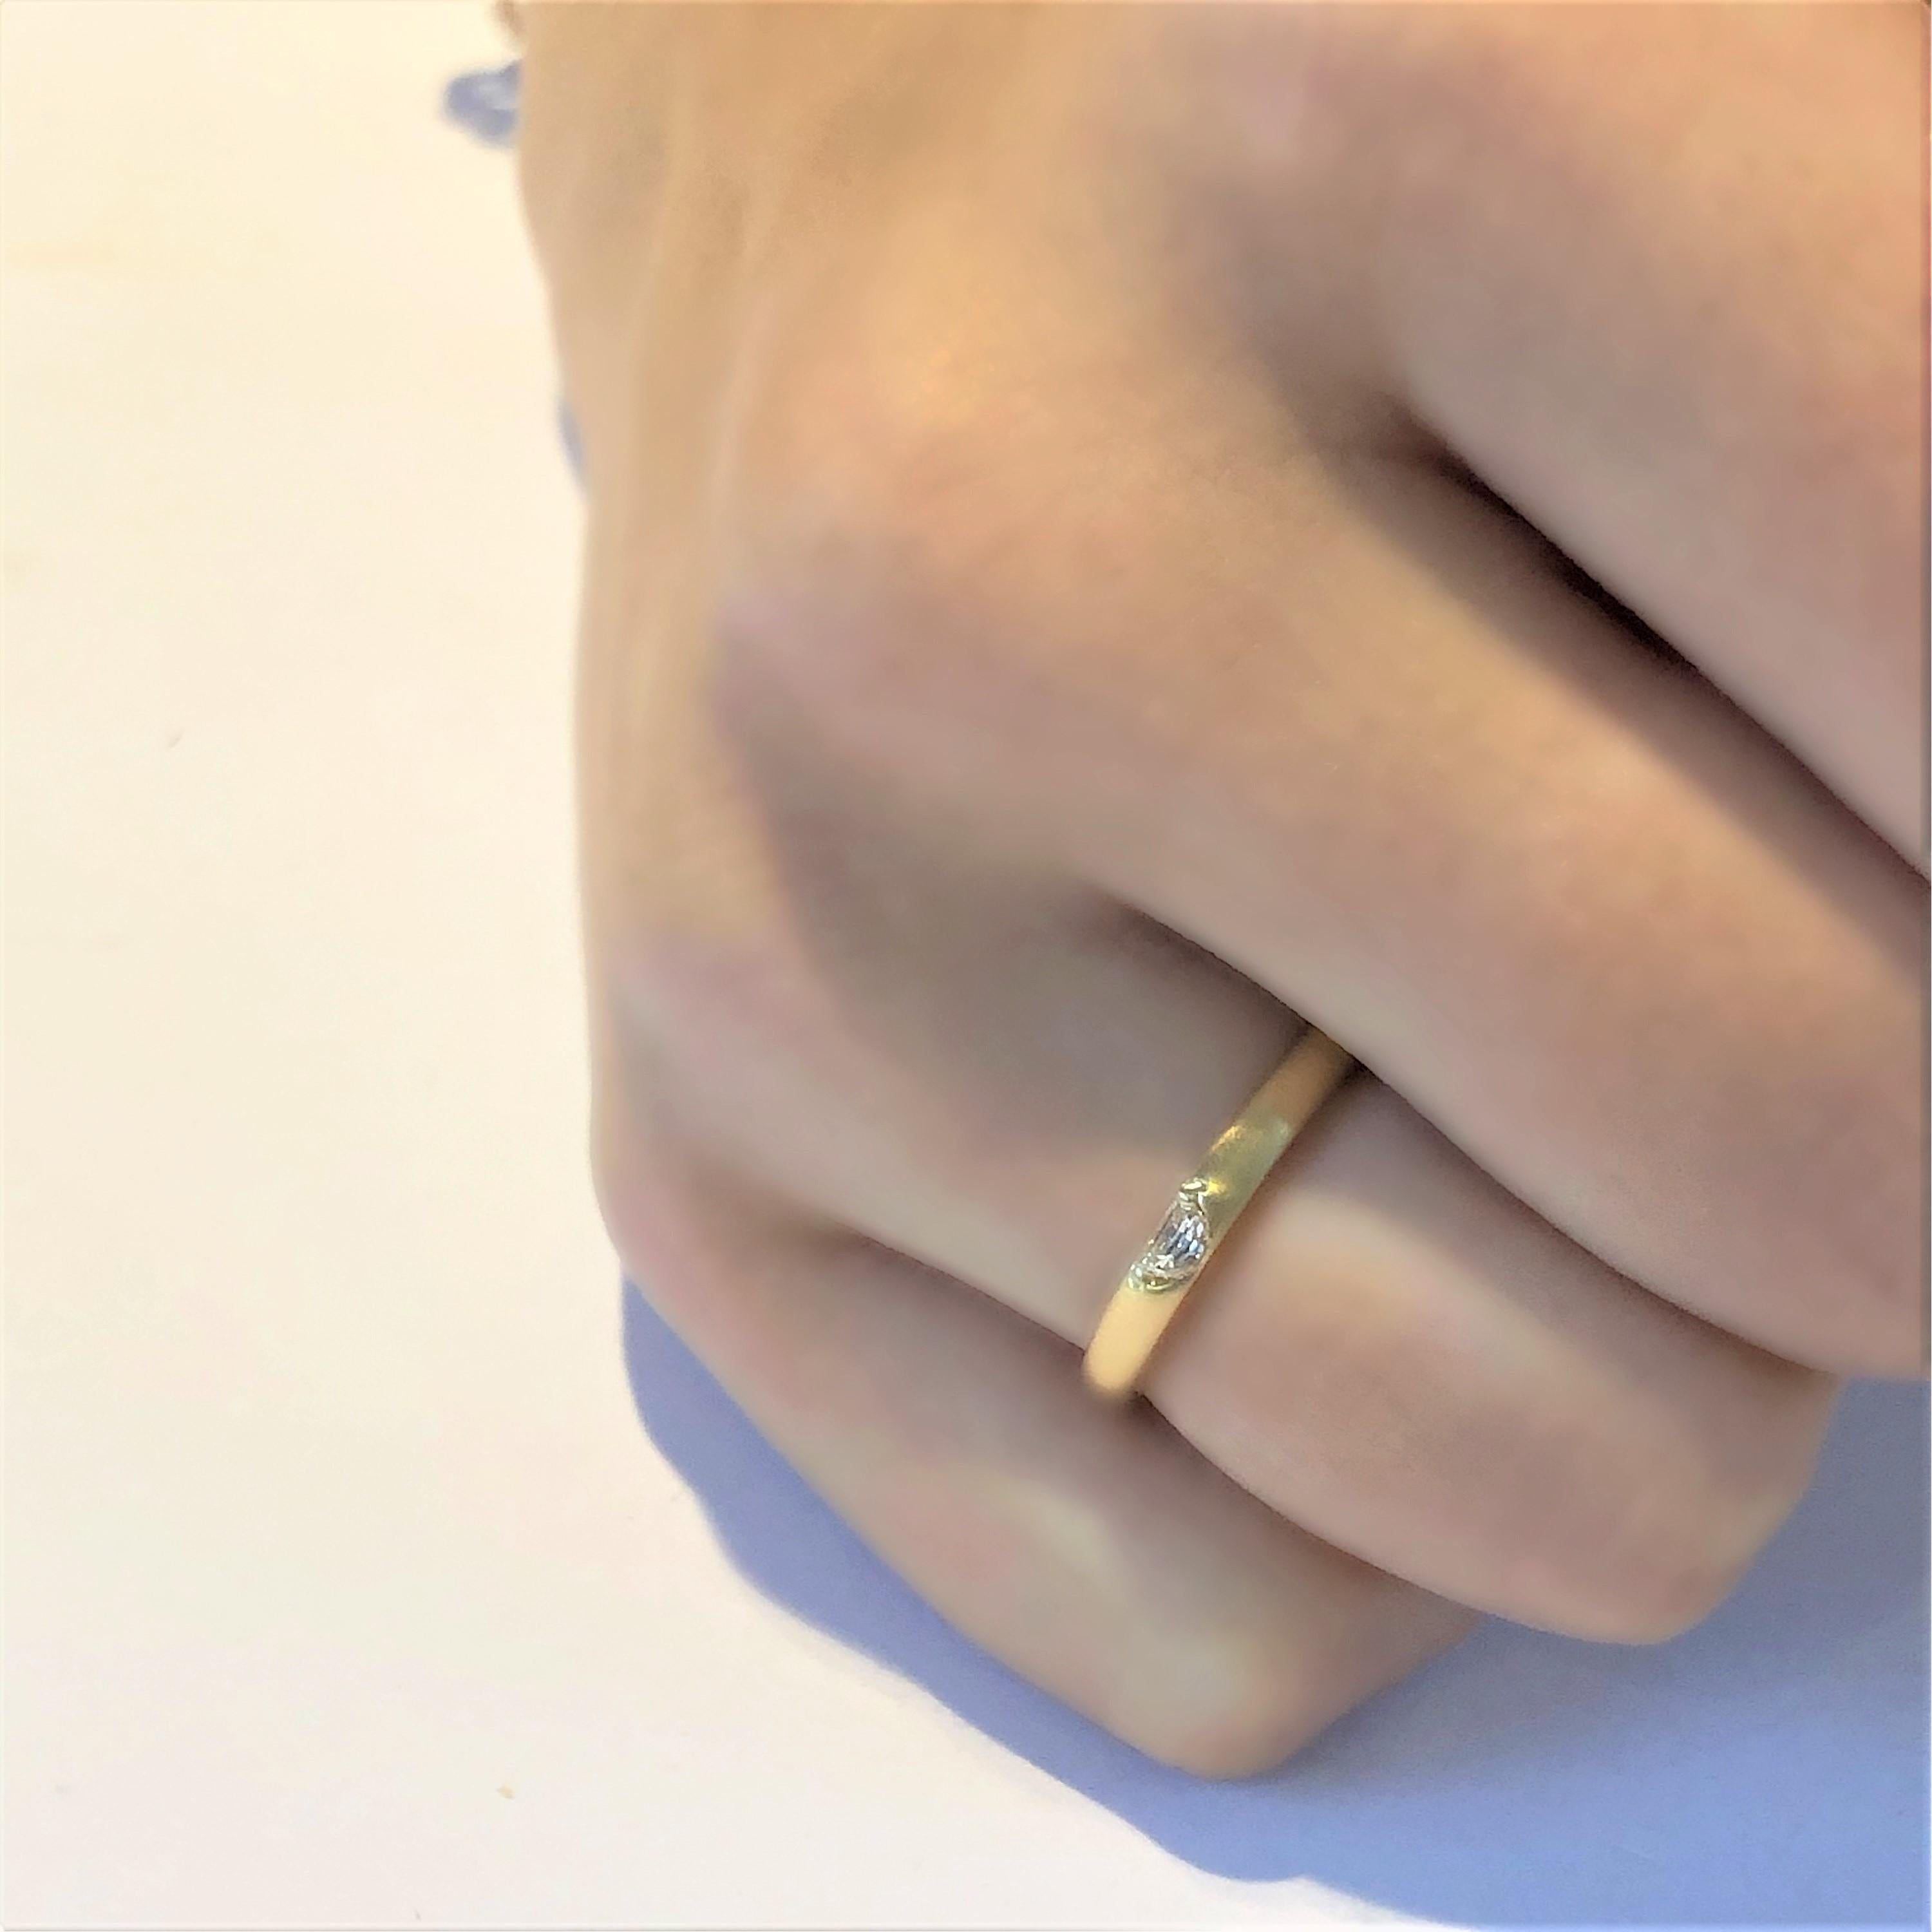 Eighteen karat yellow gold ring
Half Moon Shape diamond weighing 0.17 carat   
Bandwidth 2.5 millimeter    
Semi matt finish                                                               
Ring size 6 In Stock
Ring can be resized
New Ring
Handmade in